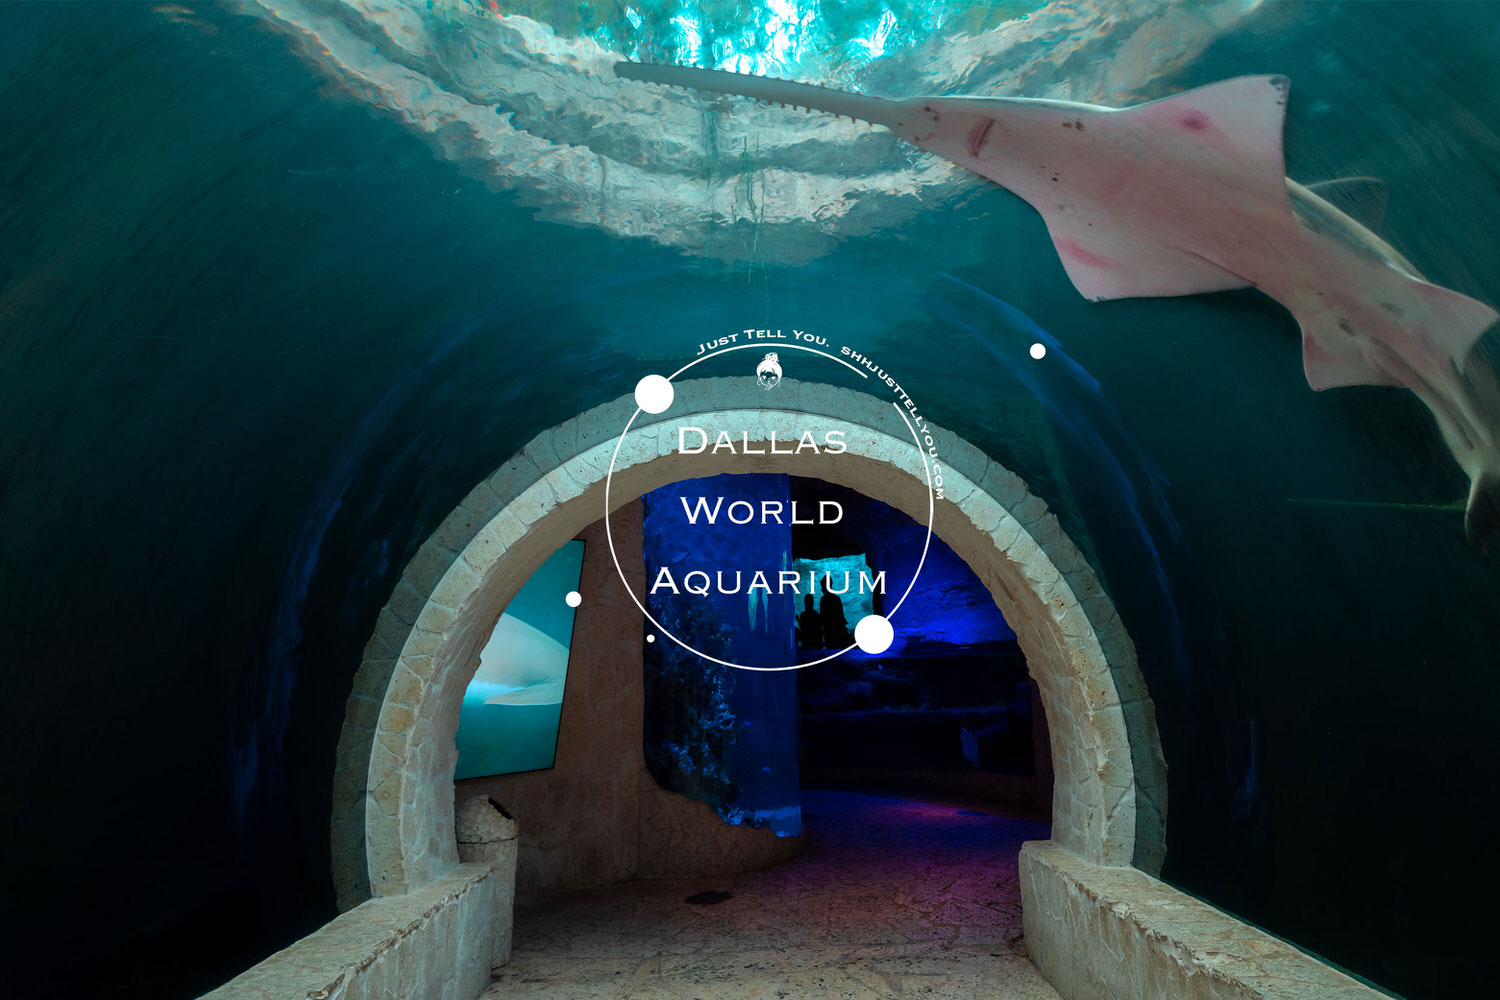 Dallas world aquarium德州達拉斯水族館